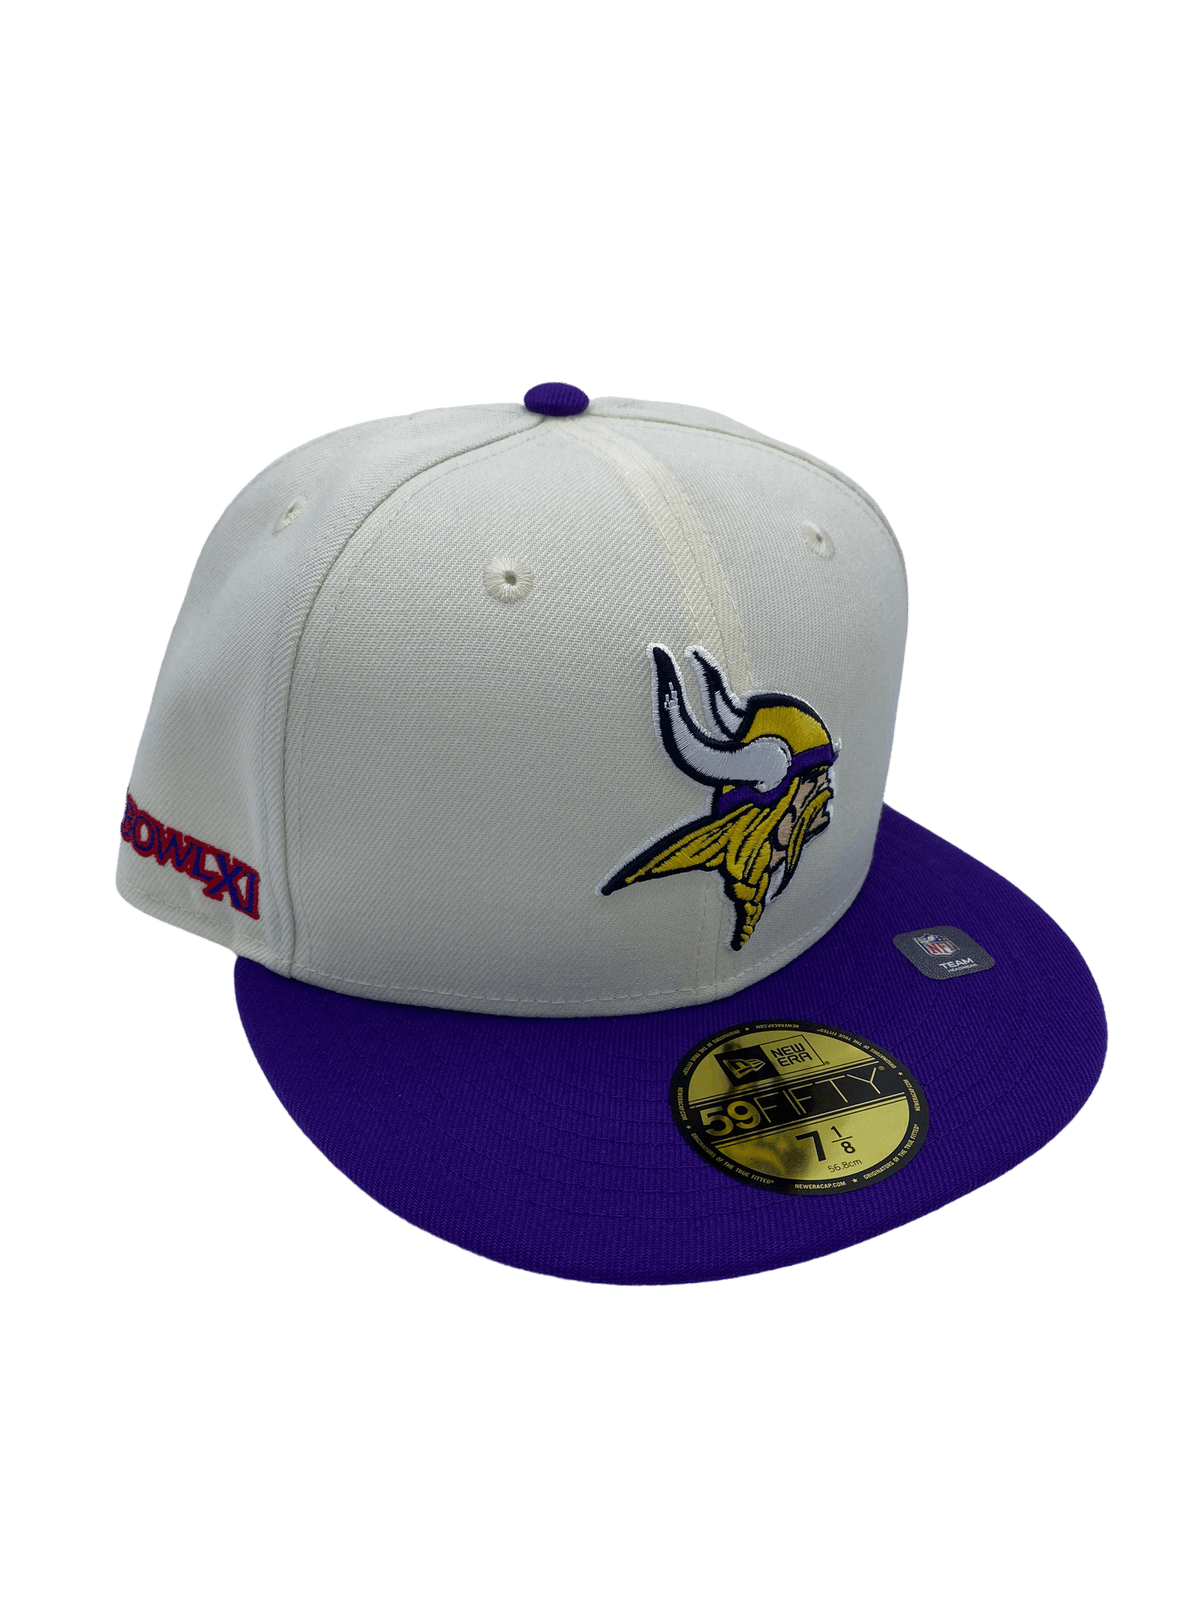 LSU Tigers Vintage NCAA New Era 9FIFTY 9FIFTY Snapback Hat (Corduroy Purple Gray Under BRIM)